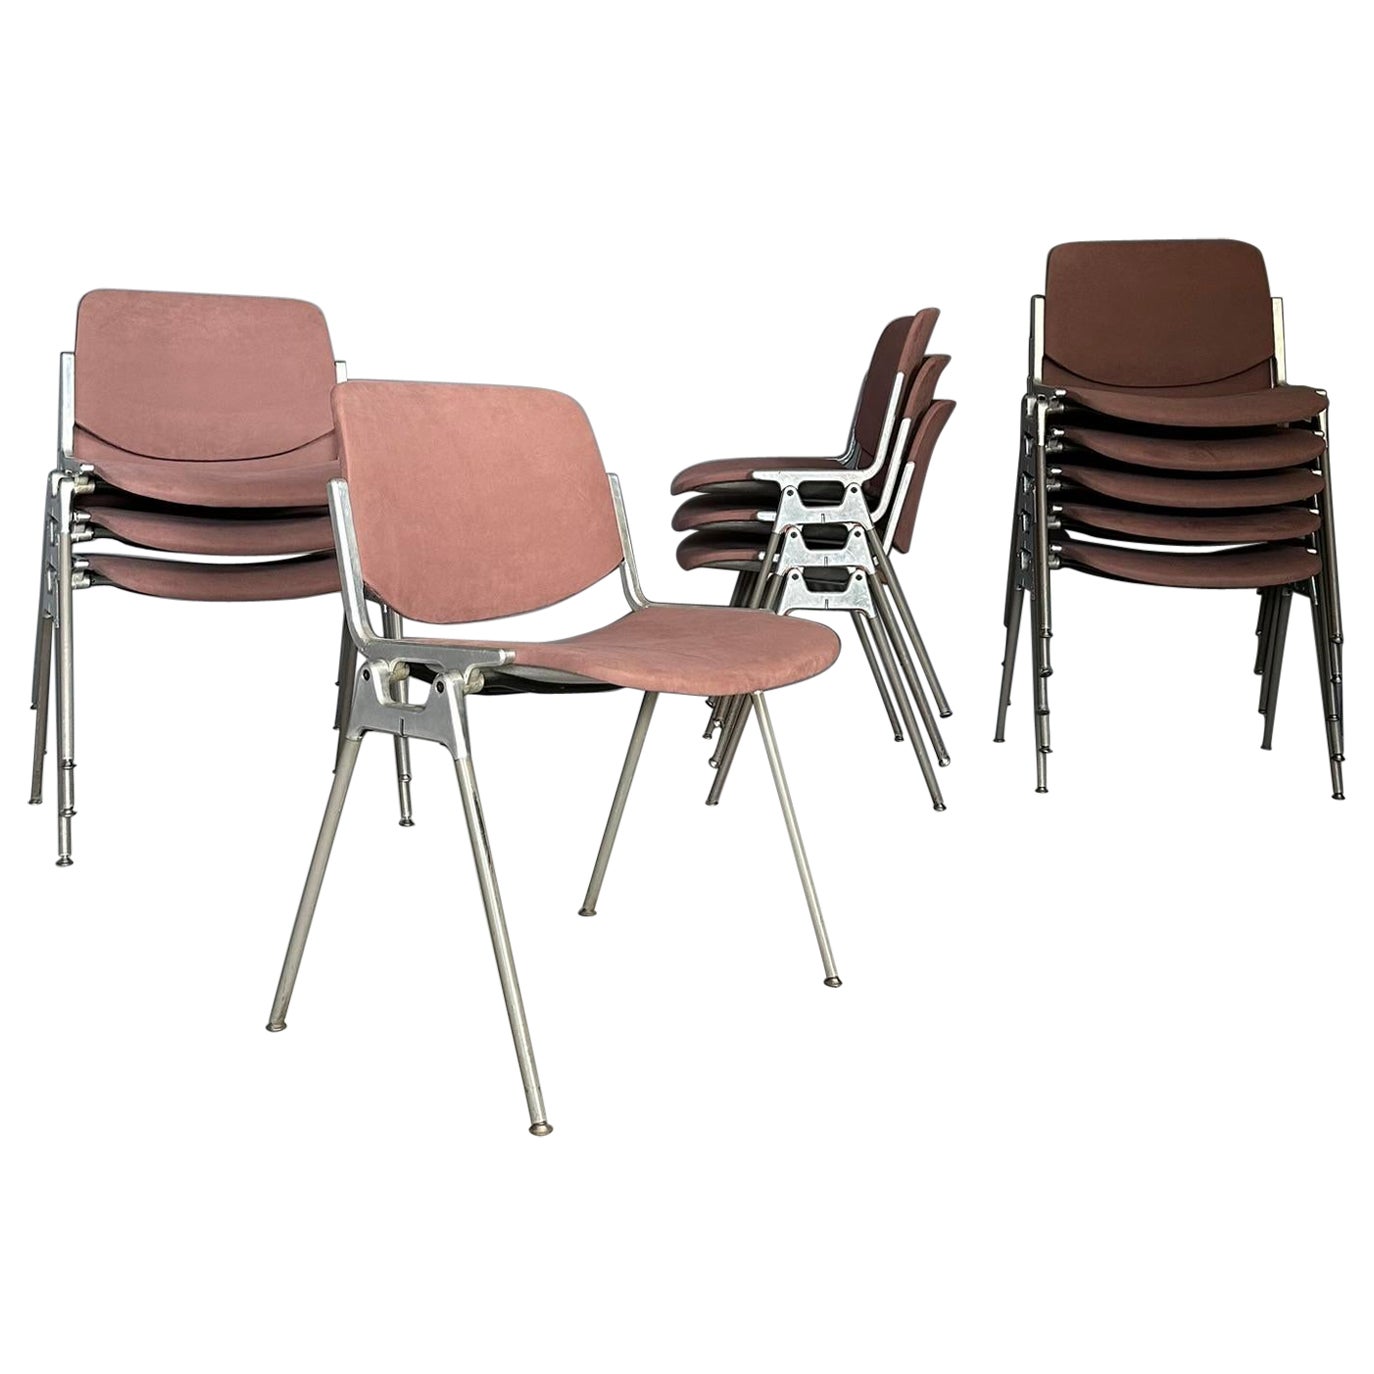 Set of 12 DSC 106 Chairs by Giancarlo Piretti, for Anonima Castelli